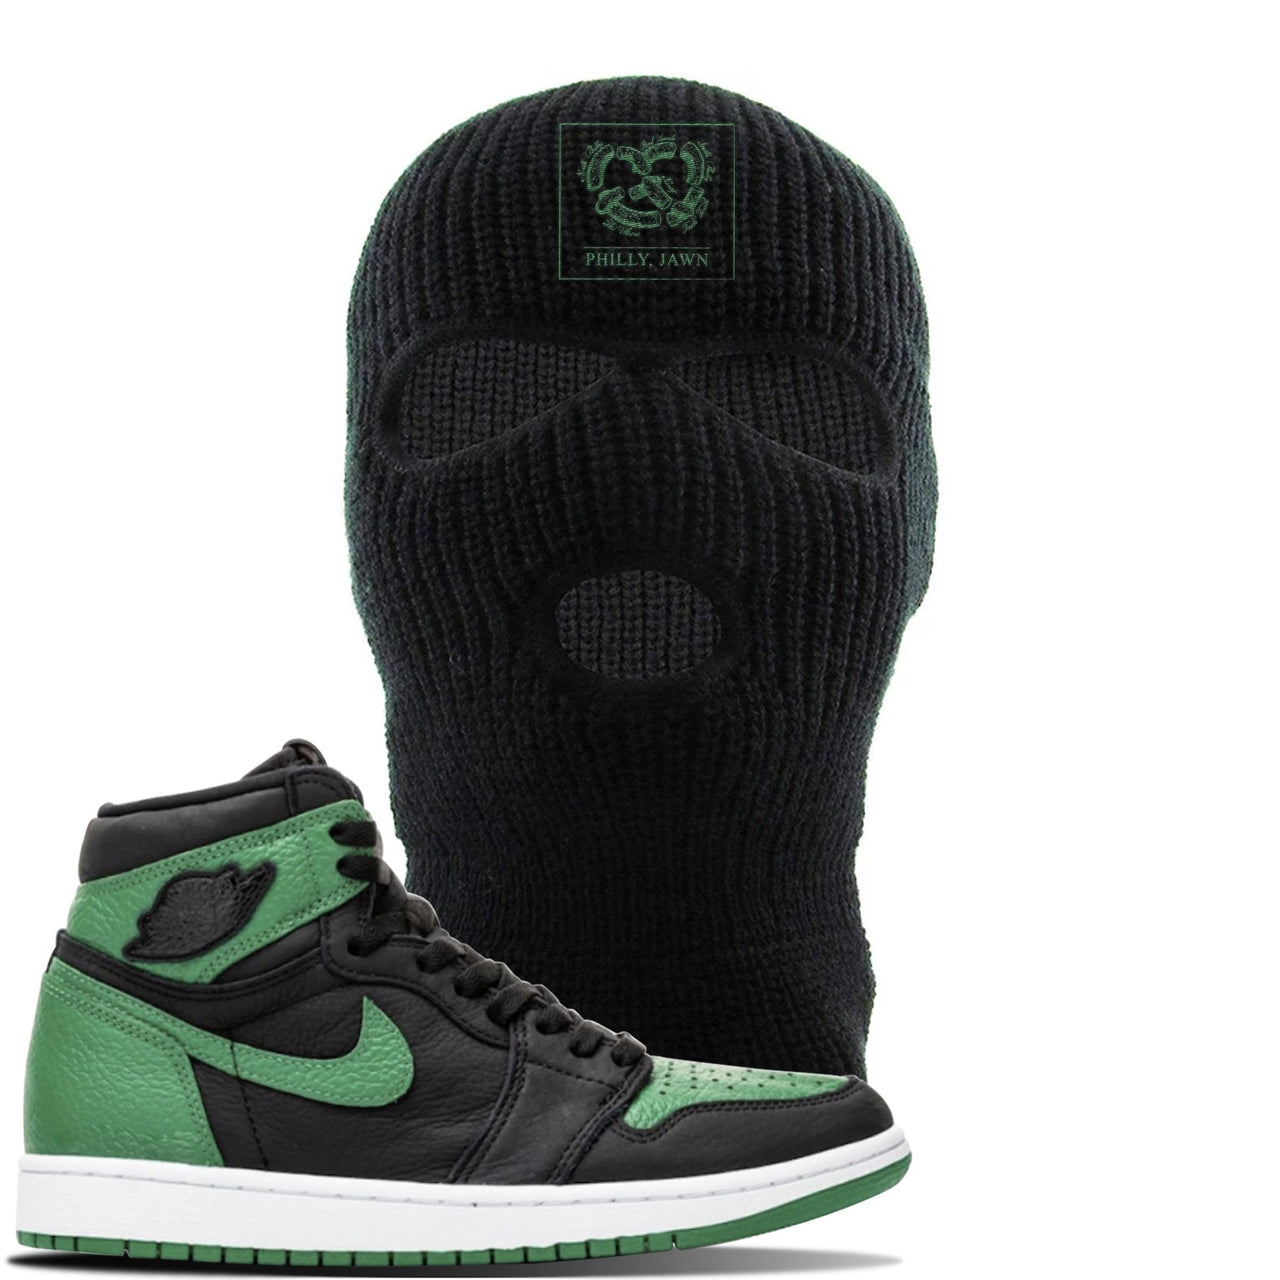 Jordan 1 Retro High OG Pine Green Gym Sneaker Black Ski Mask | Hat to match Air Jordan 1 Retro High OG Pine Green Gym Shoes | Philly Pretzel